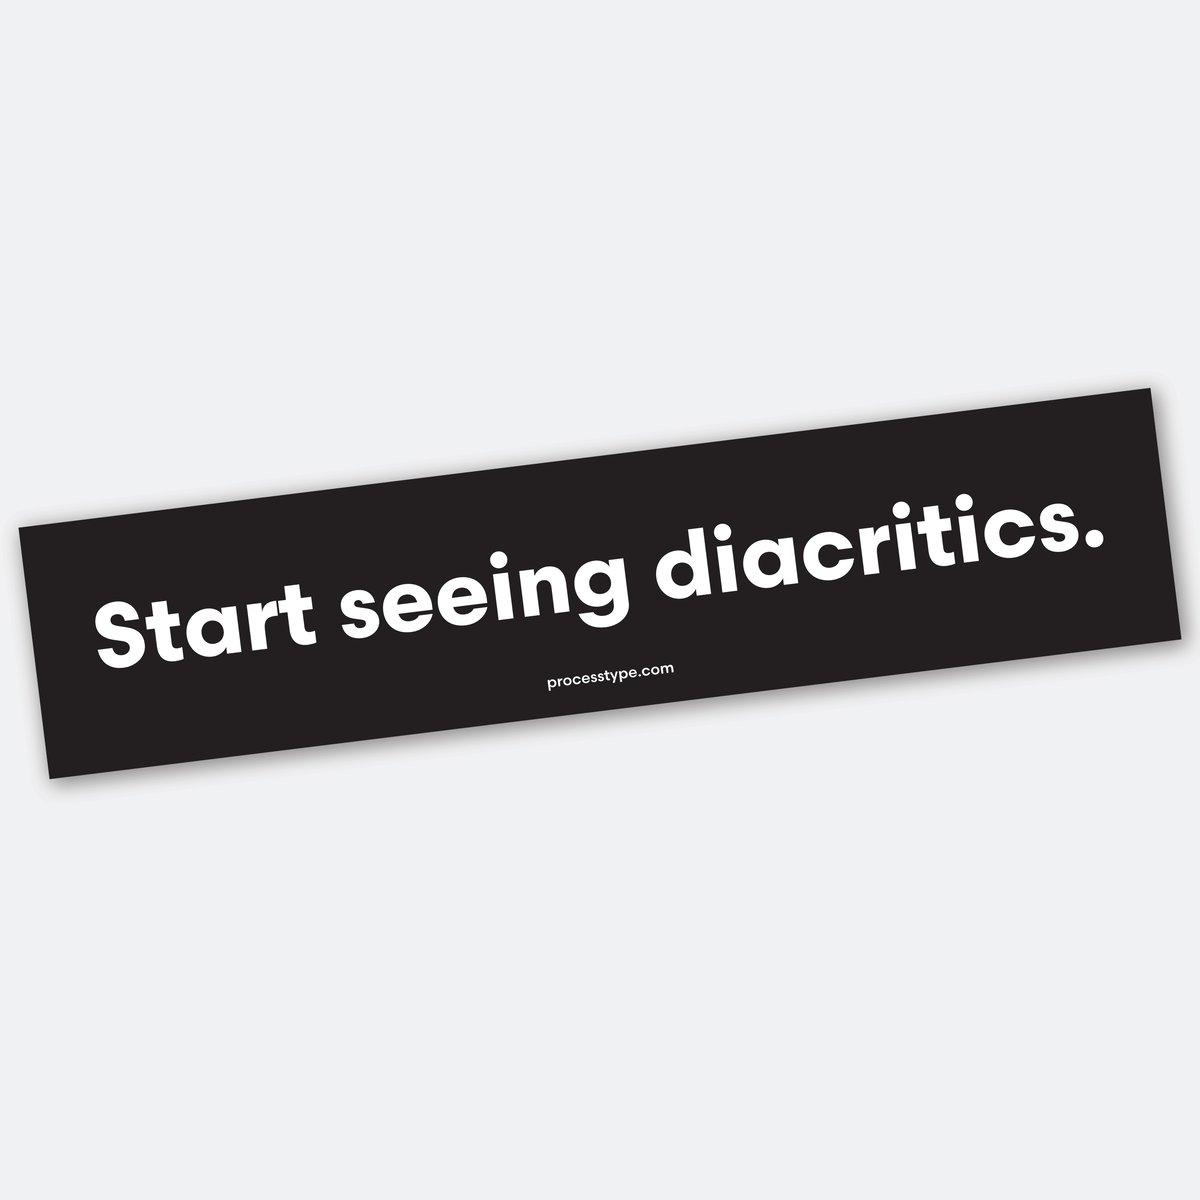 Image of “Start seeing diacritics.” sticker